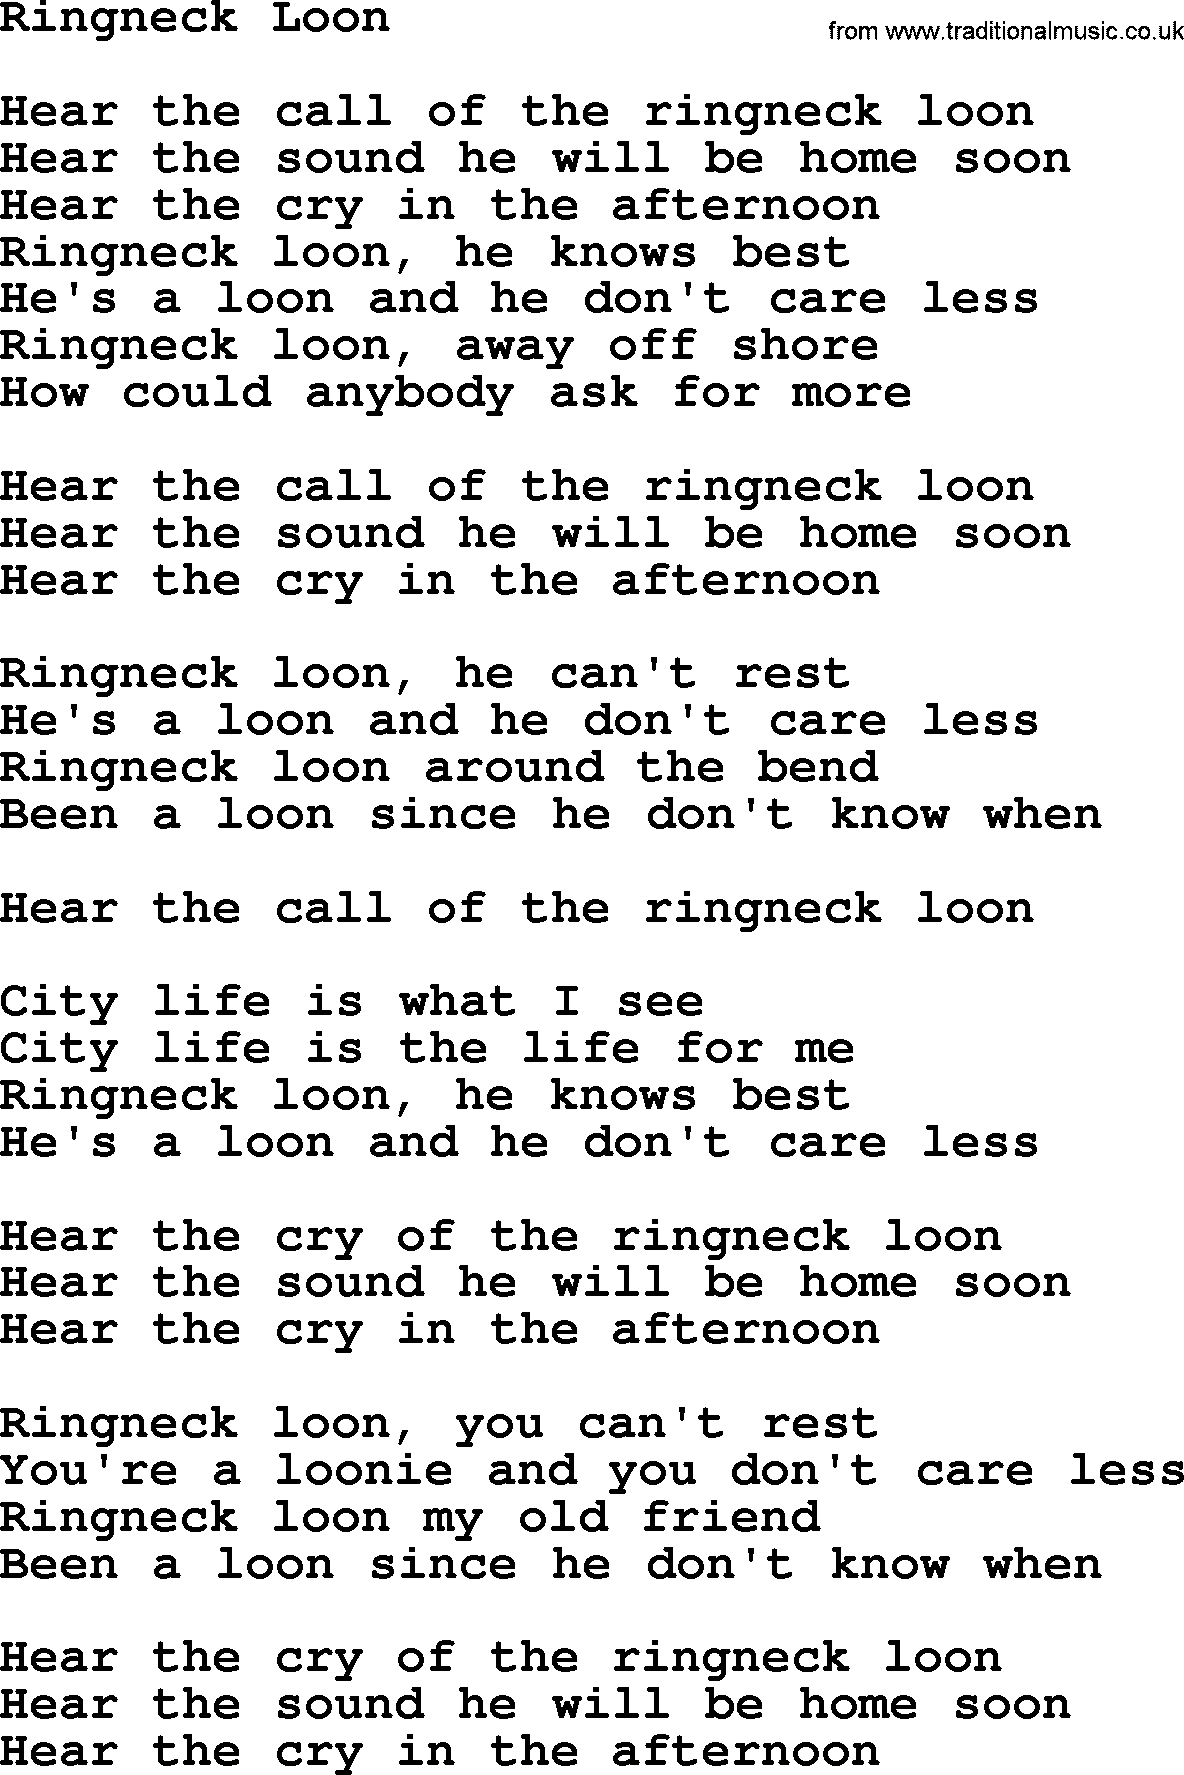 Gordon Lightfoot song Ringneck Loon, lyrics